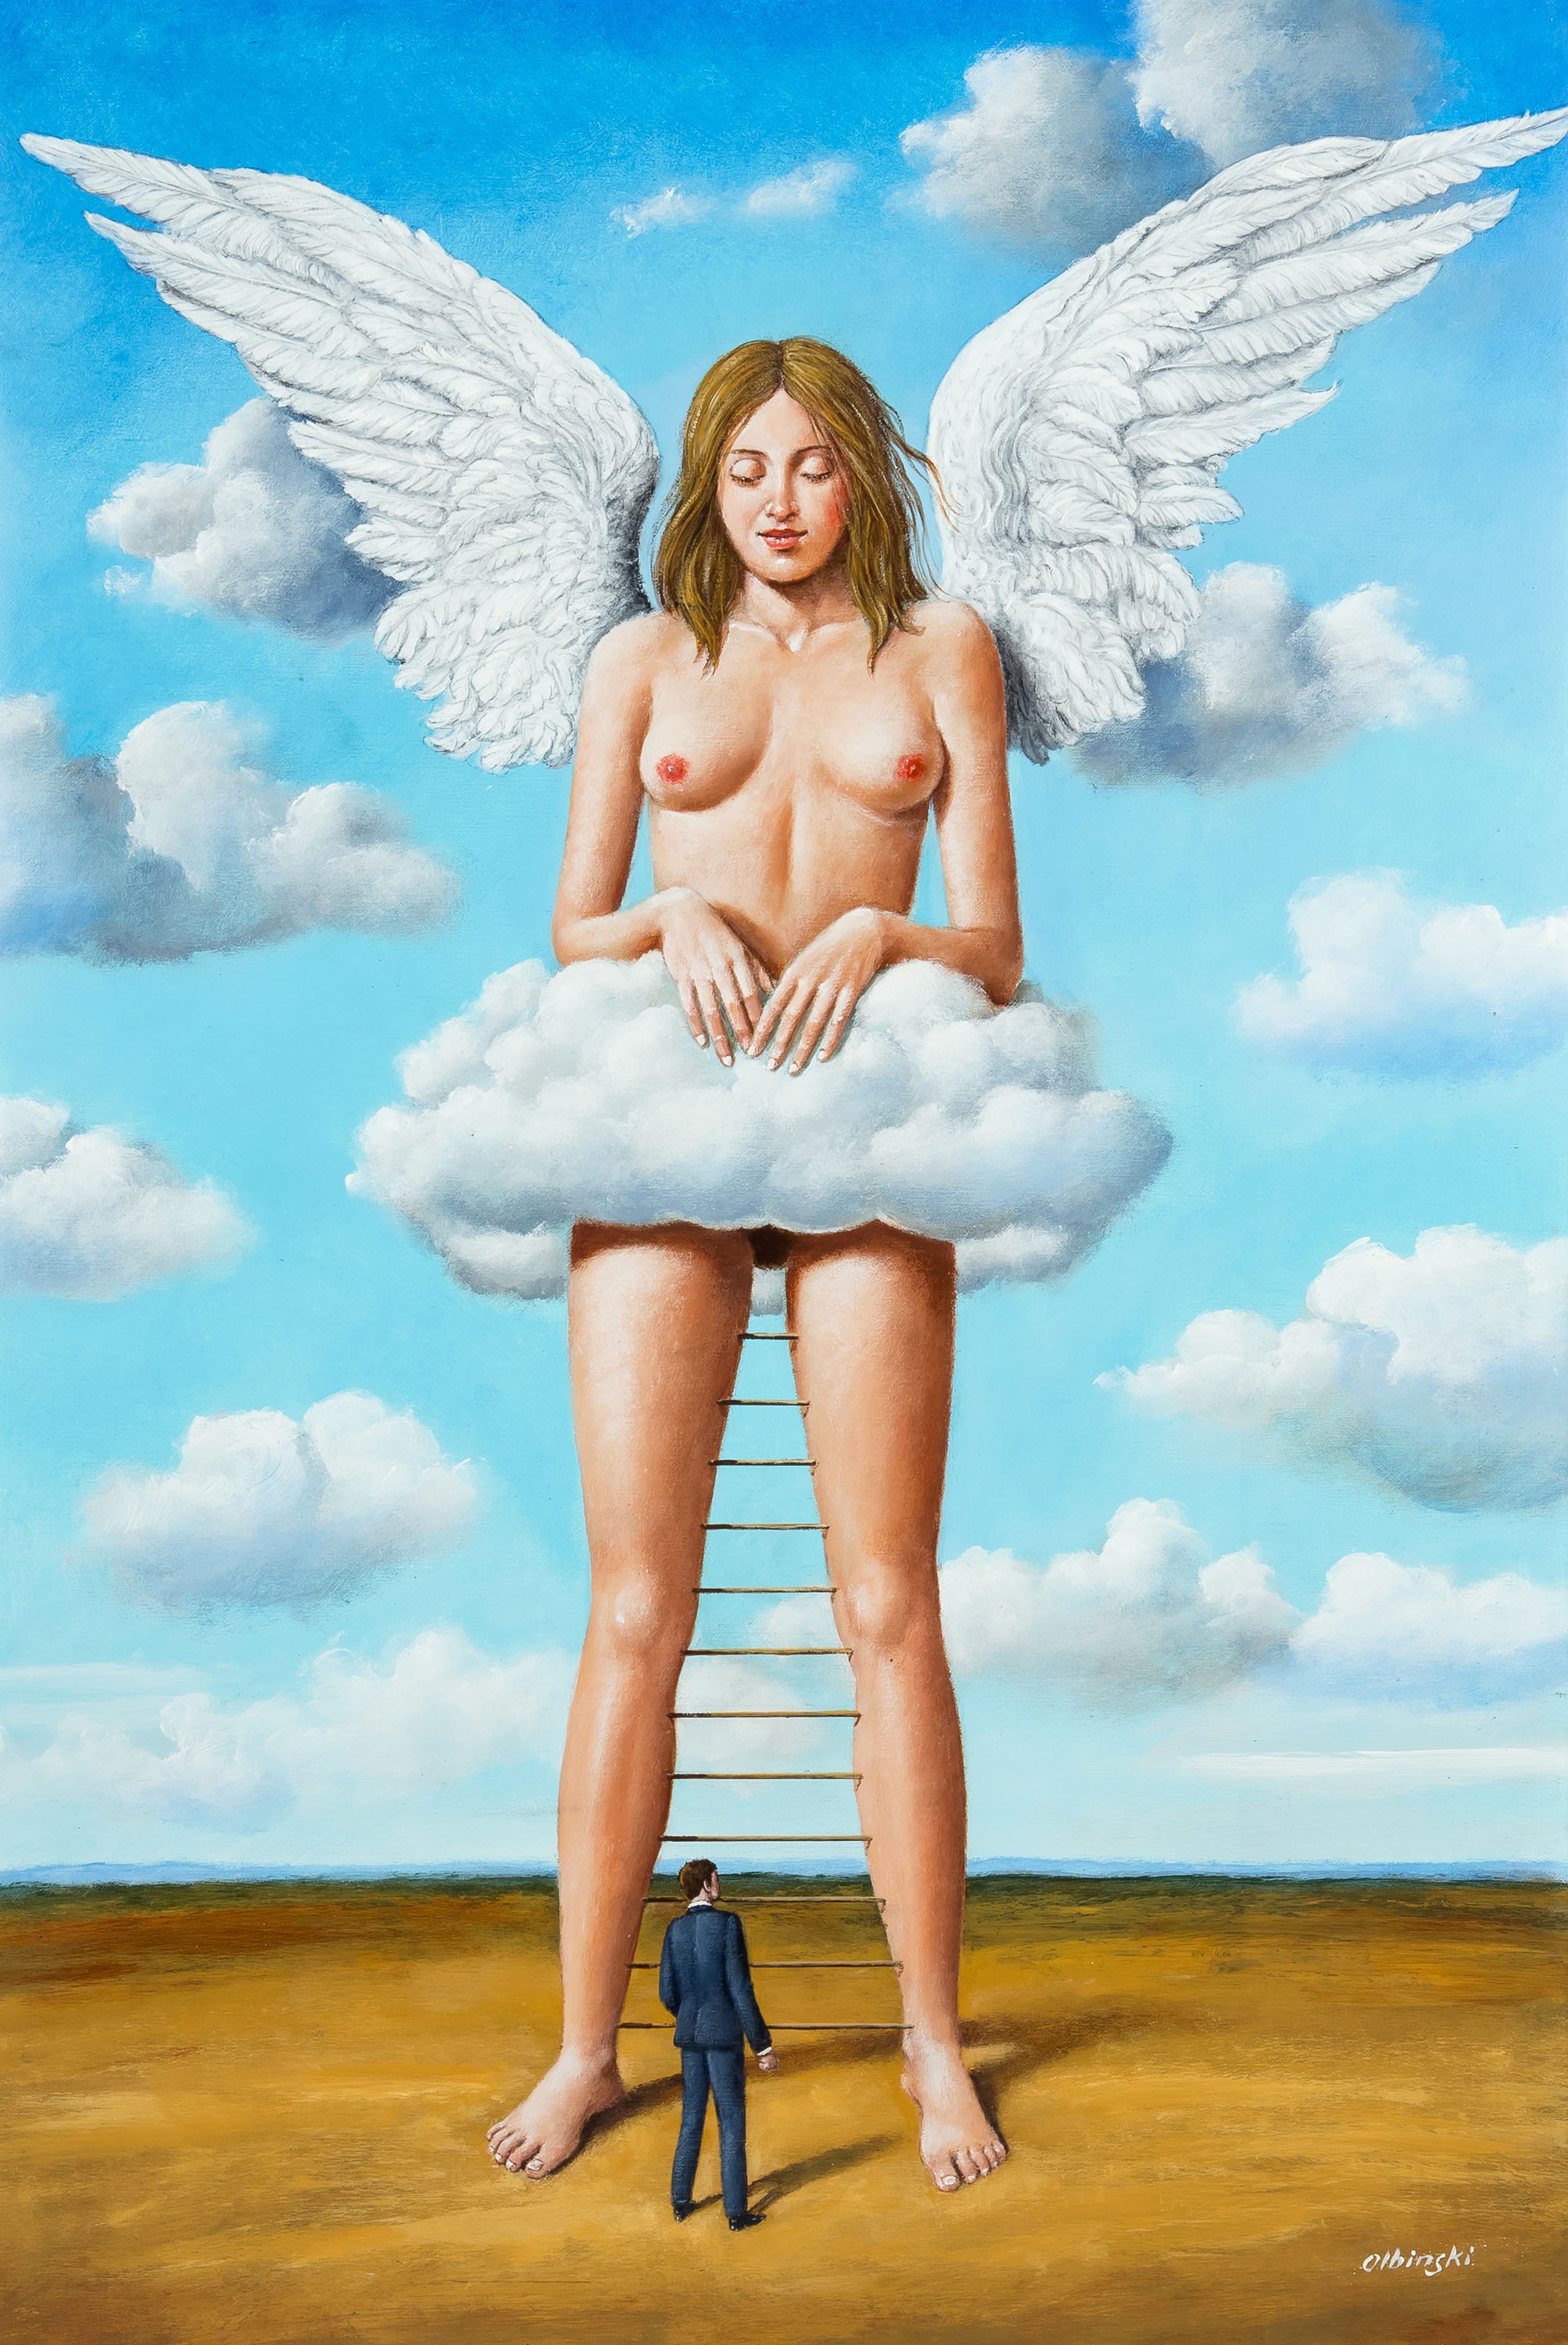 Stairway to heaven by Rafal Olbinski, march 2020